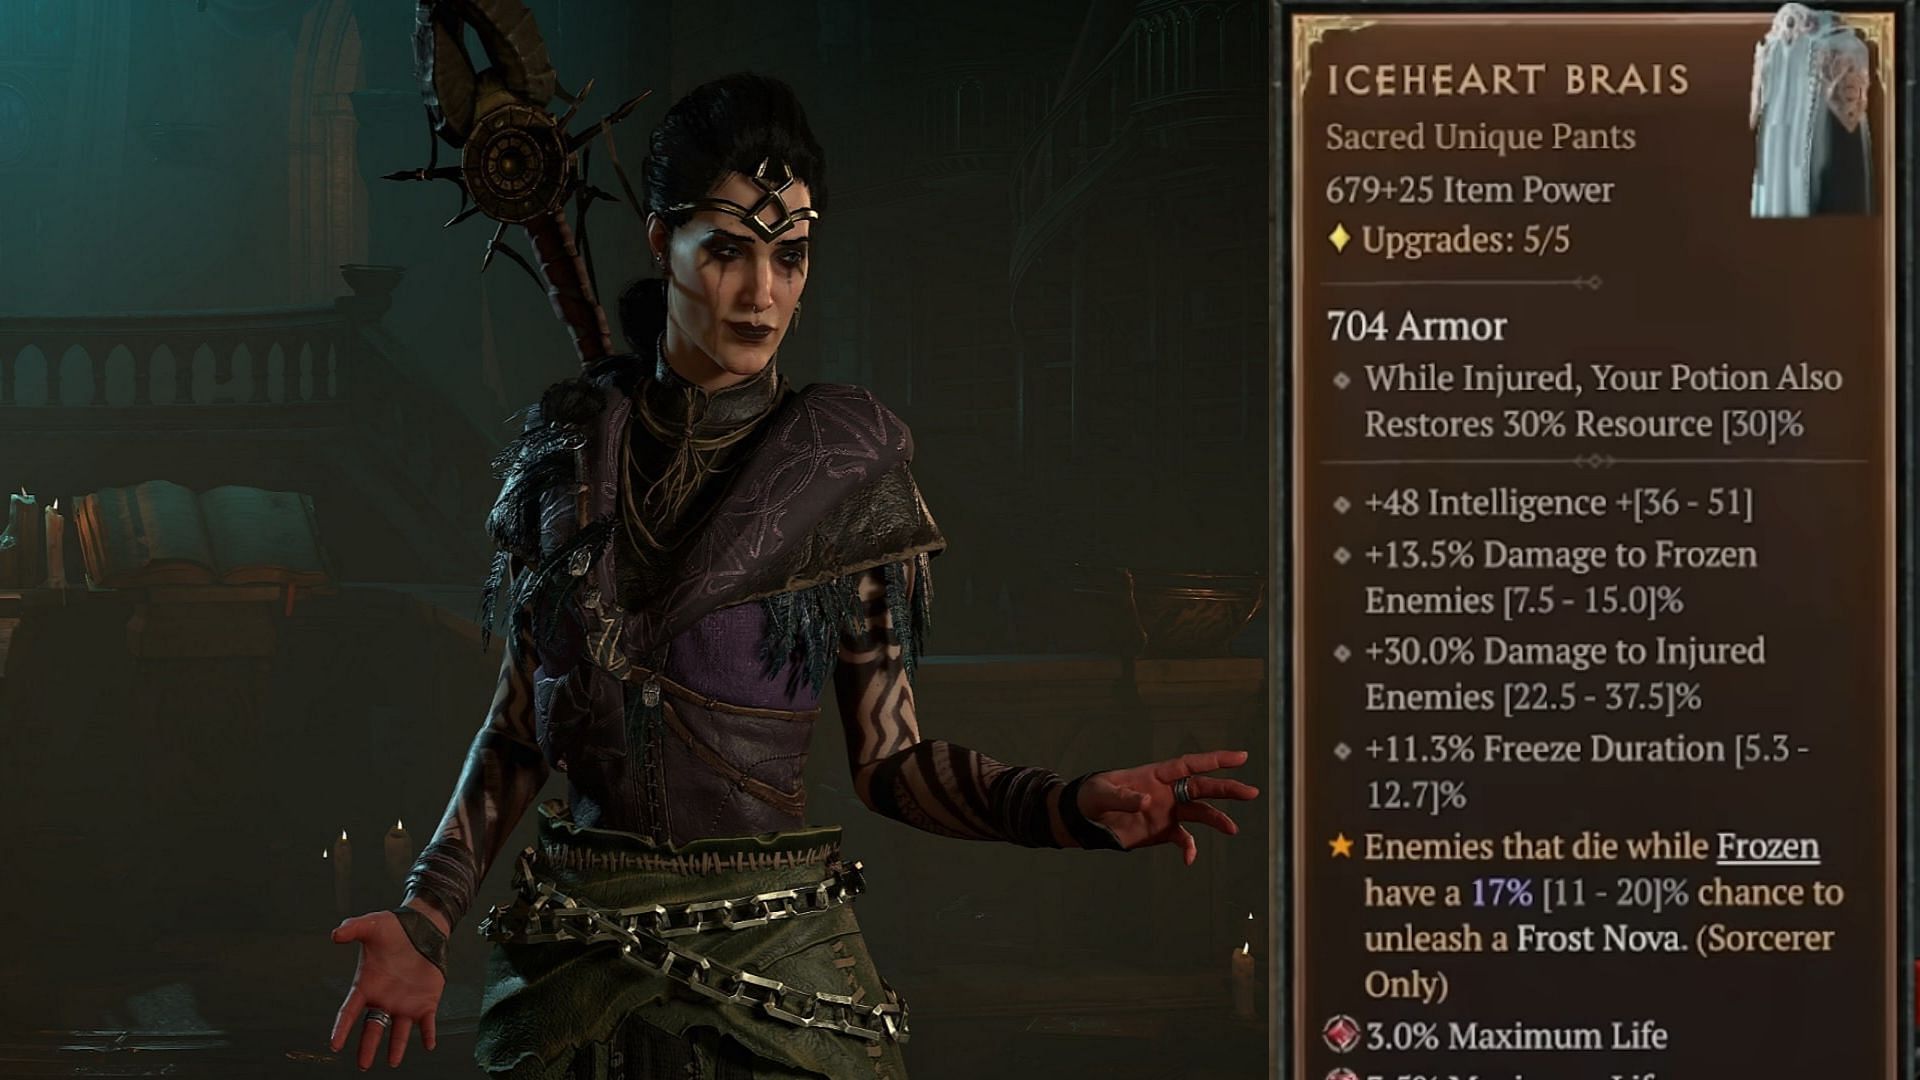 Iceheart Brais is a Unique item for the Sorcerer in Diablo 4 (Image via Blizzard Entertainment)